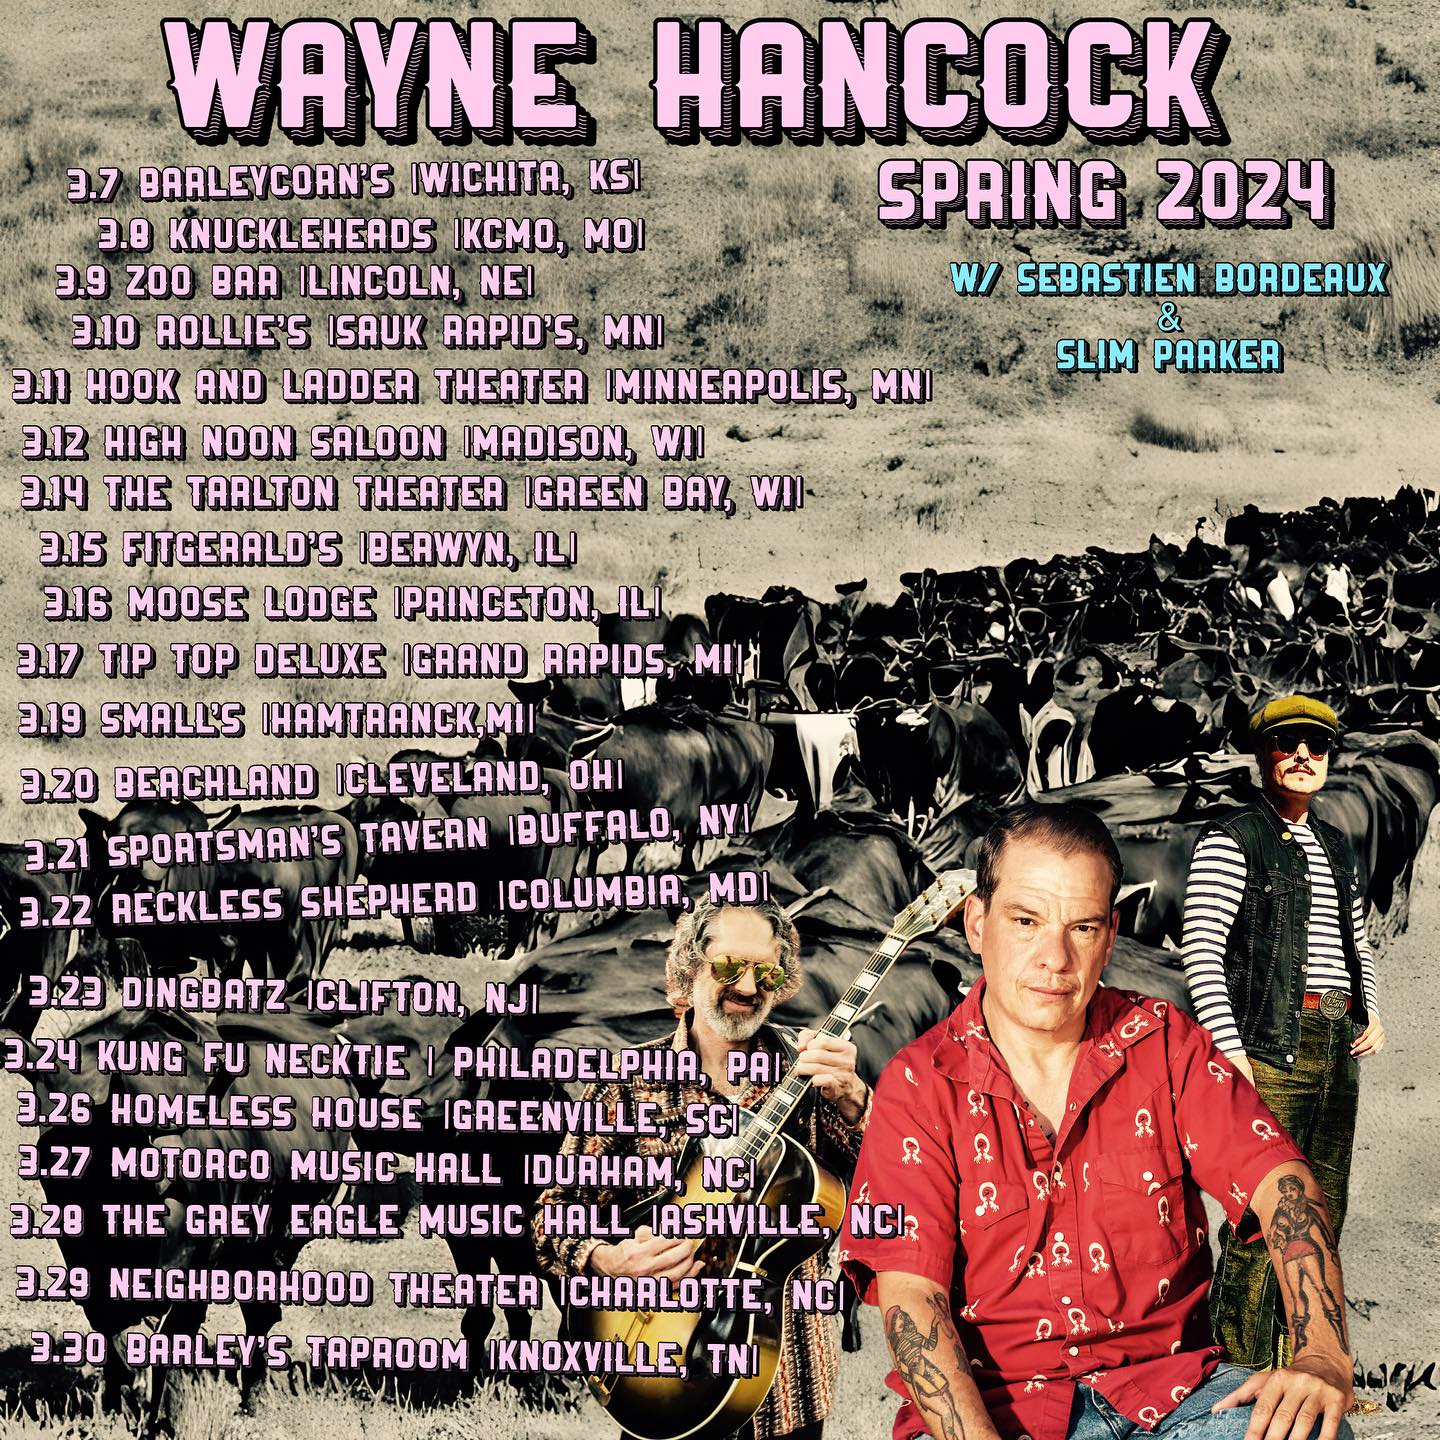 WayneHancock2024-03-10RolliesSaukRapidsMN.jpg